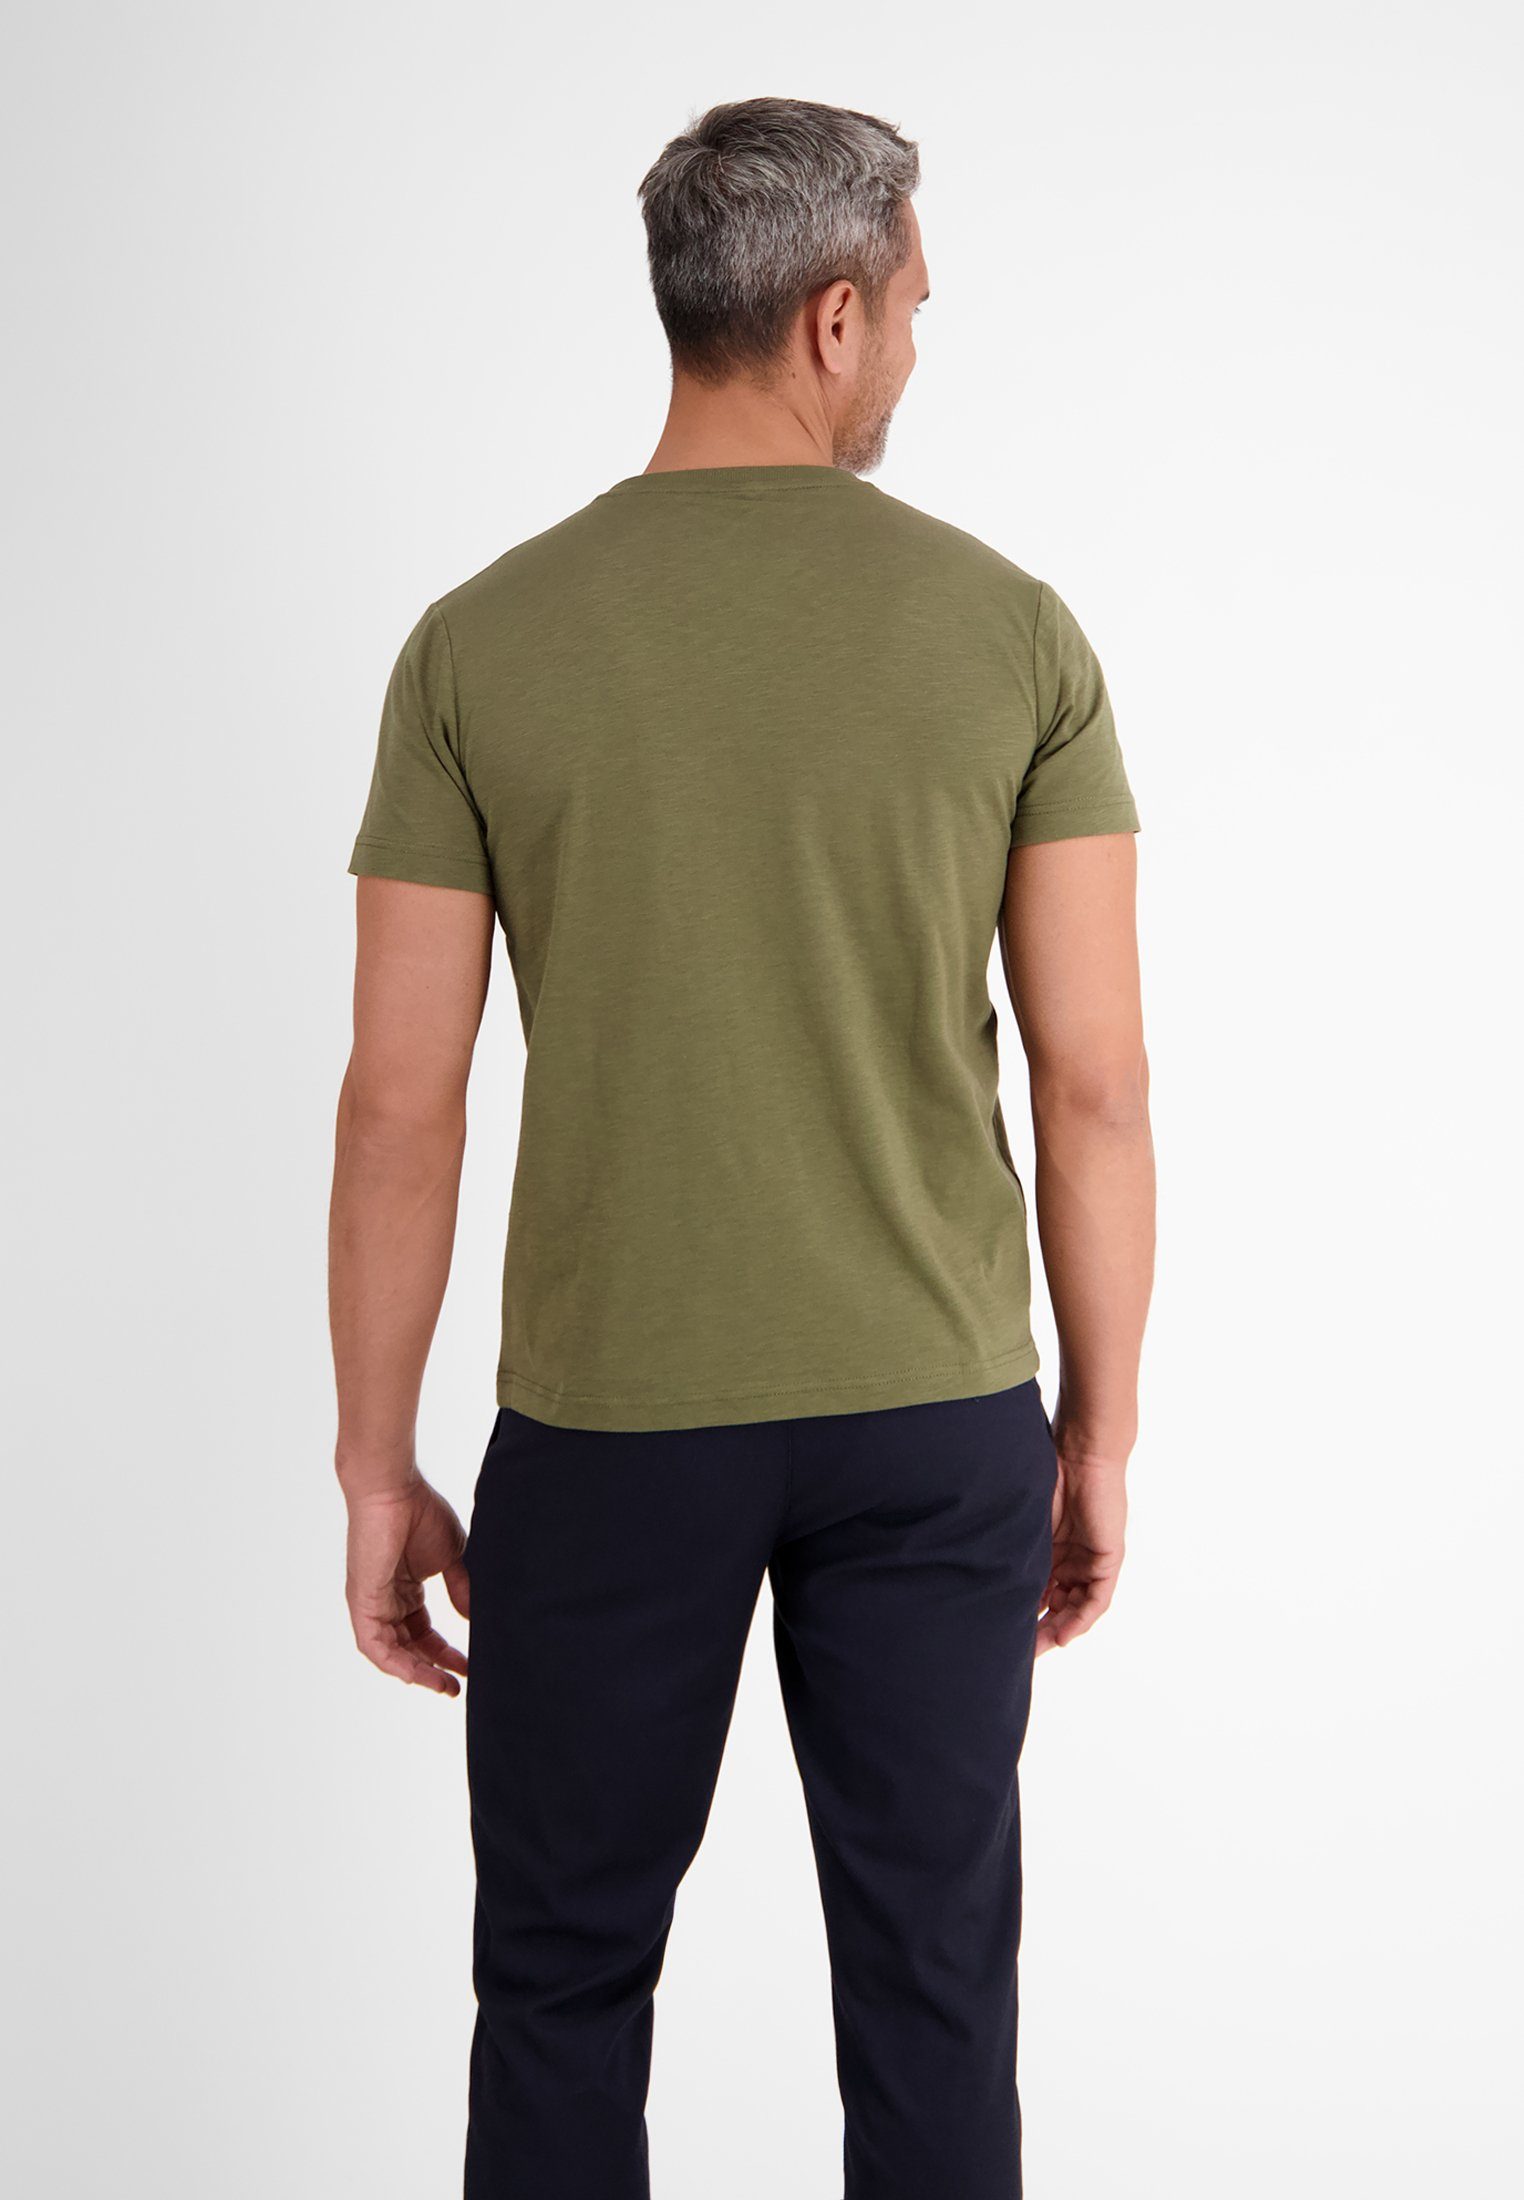 *Uncover LERROS new Print-T-Shirt T-Shirt OLIV GREEN trails* LERROS